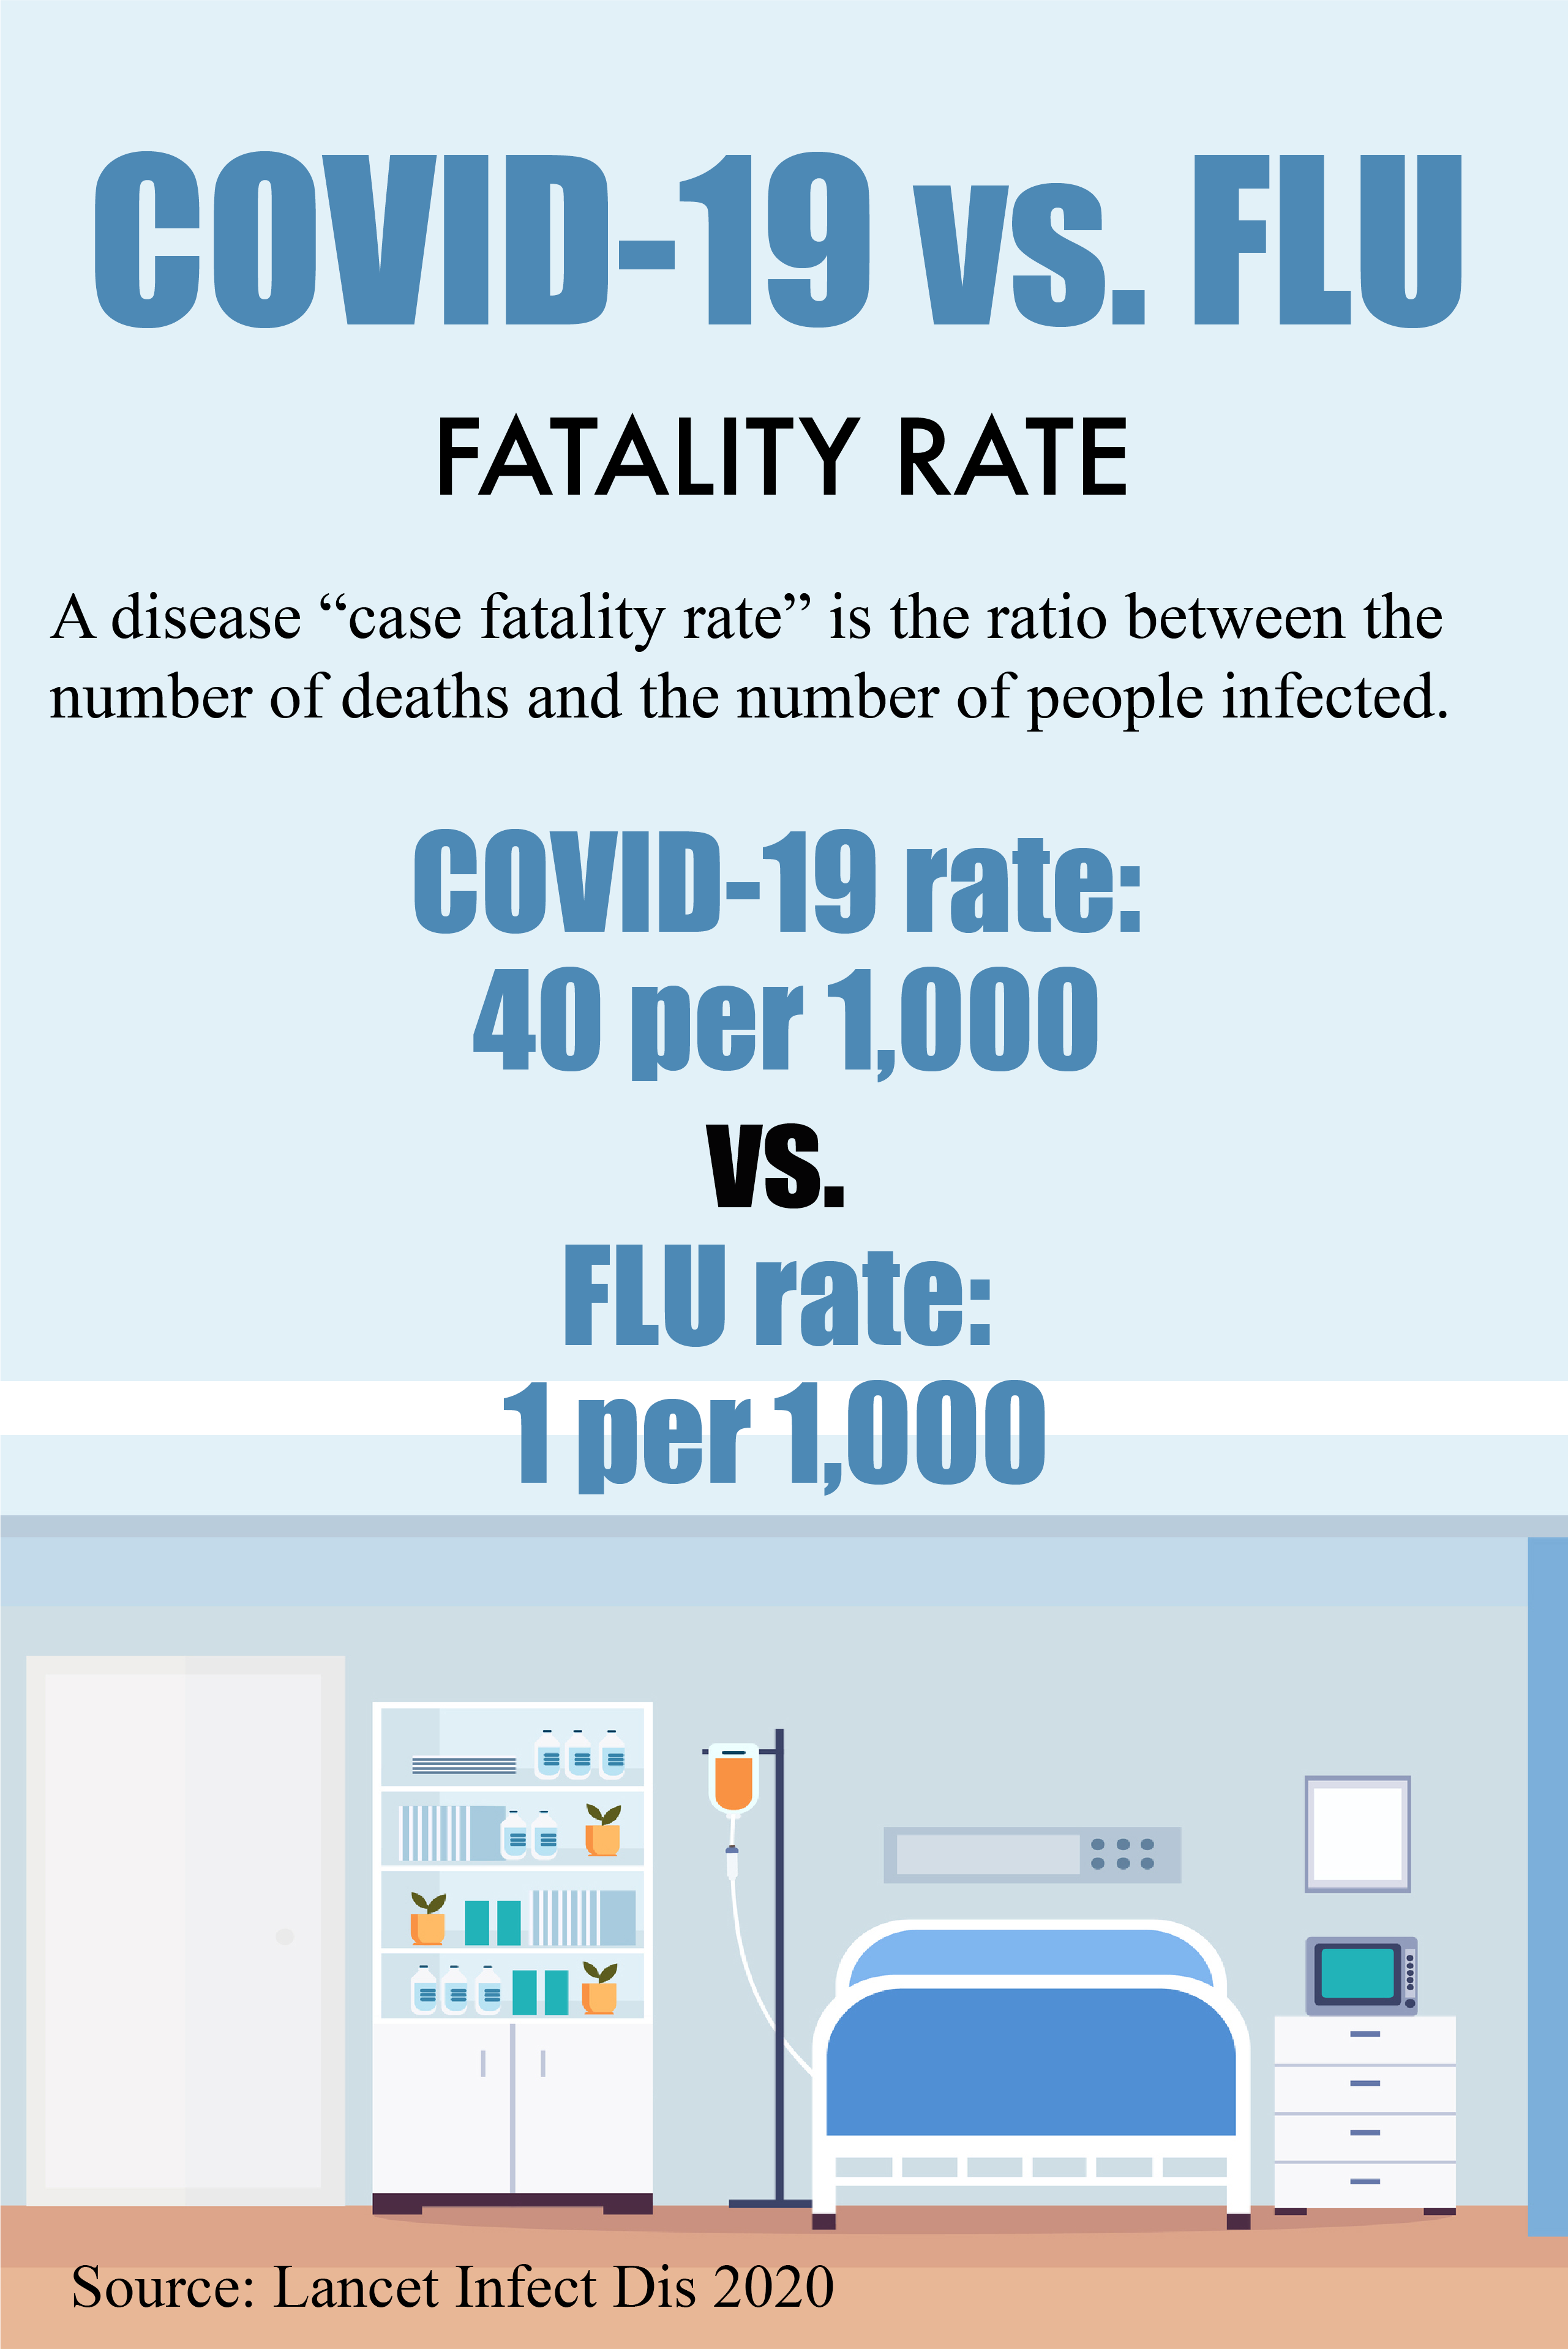 COVID-19 vs Flu fatality rate